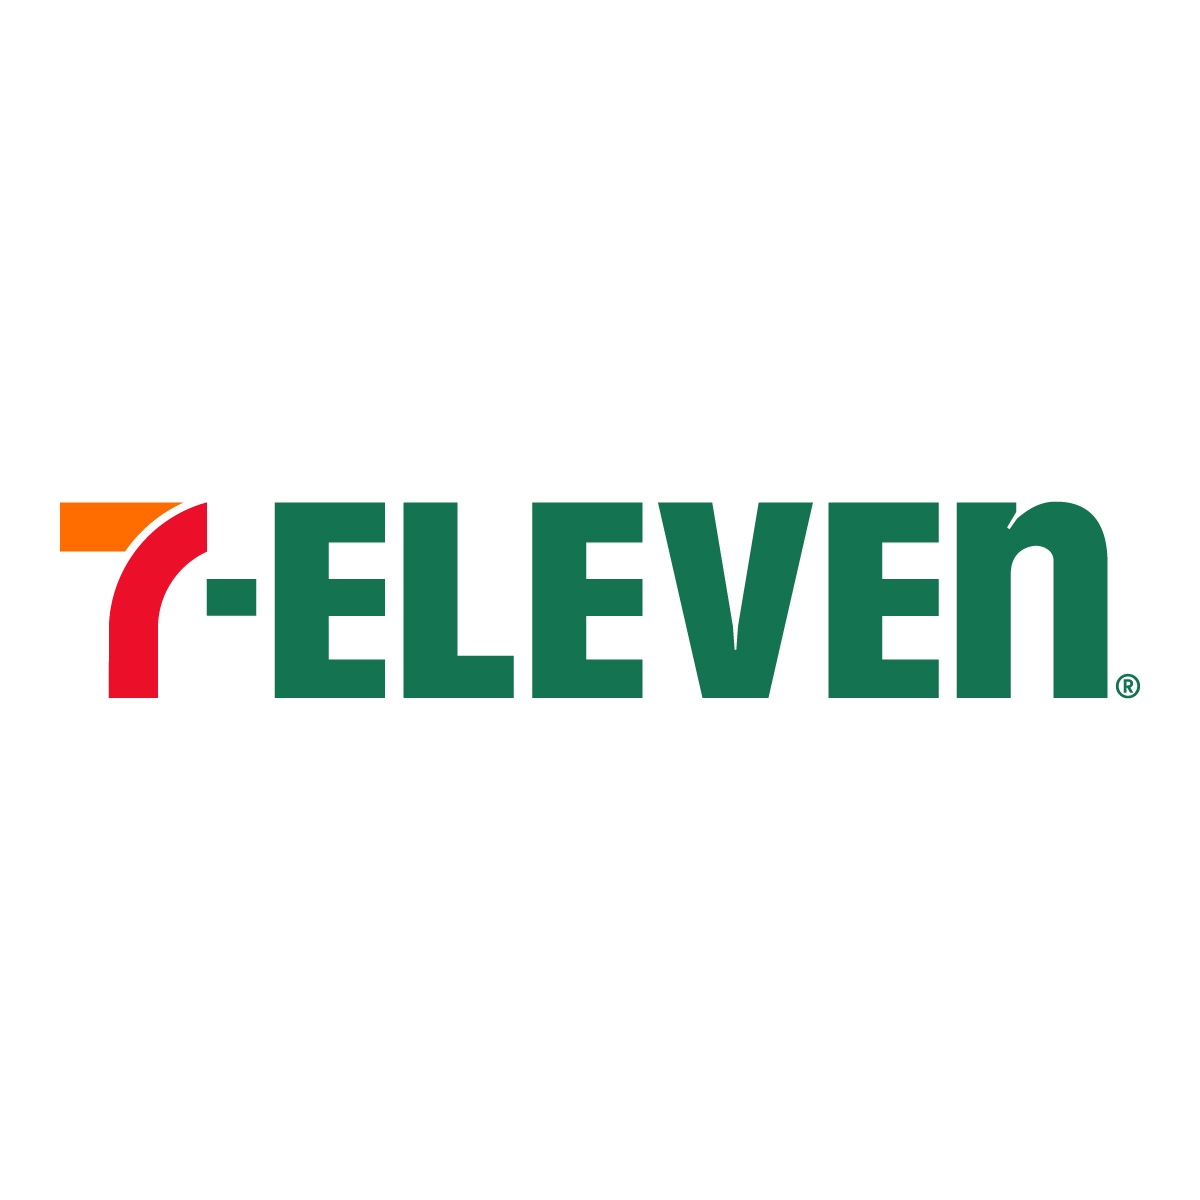 7 Eleven Logo